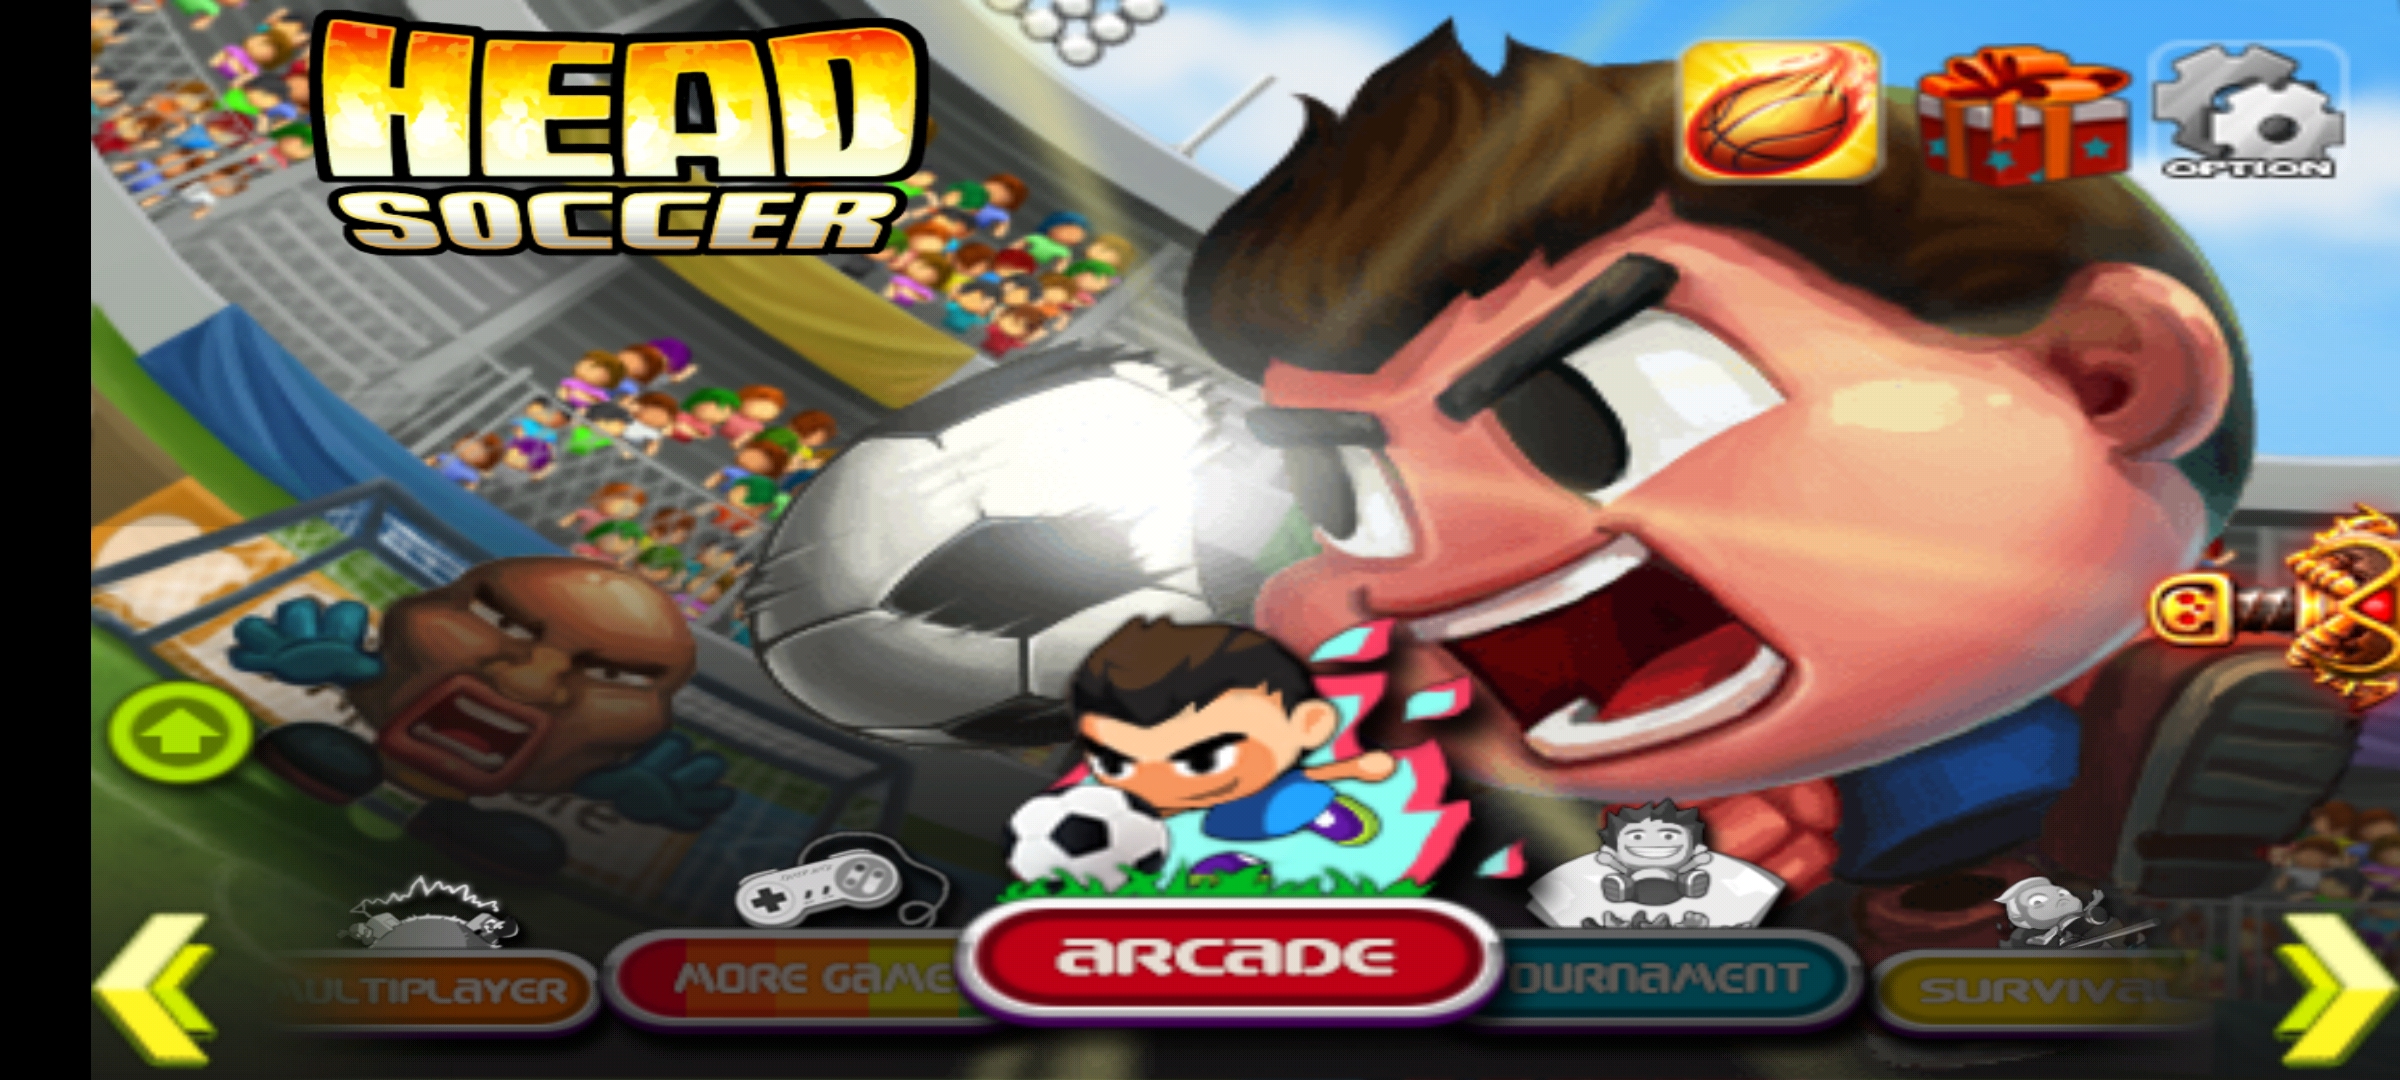 Head Soccer Mod APK v6.7.0 [Unlimited Money] - RoboModo